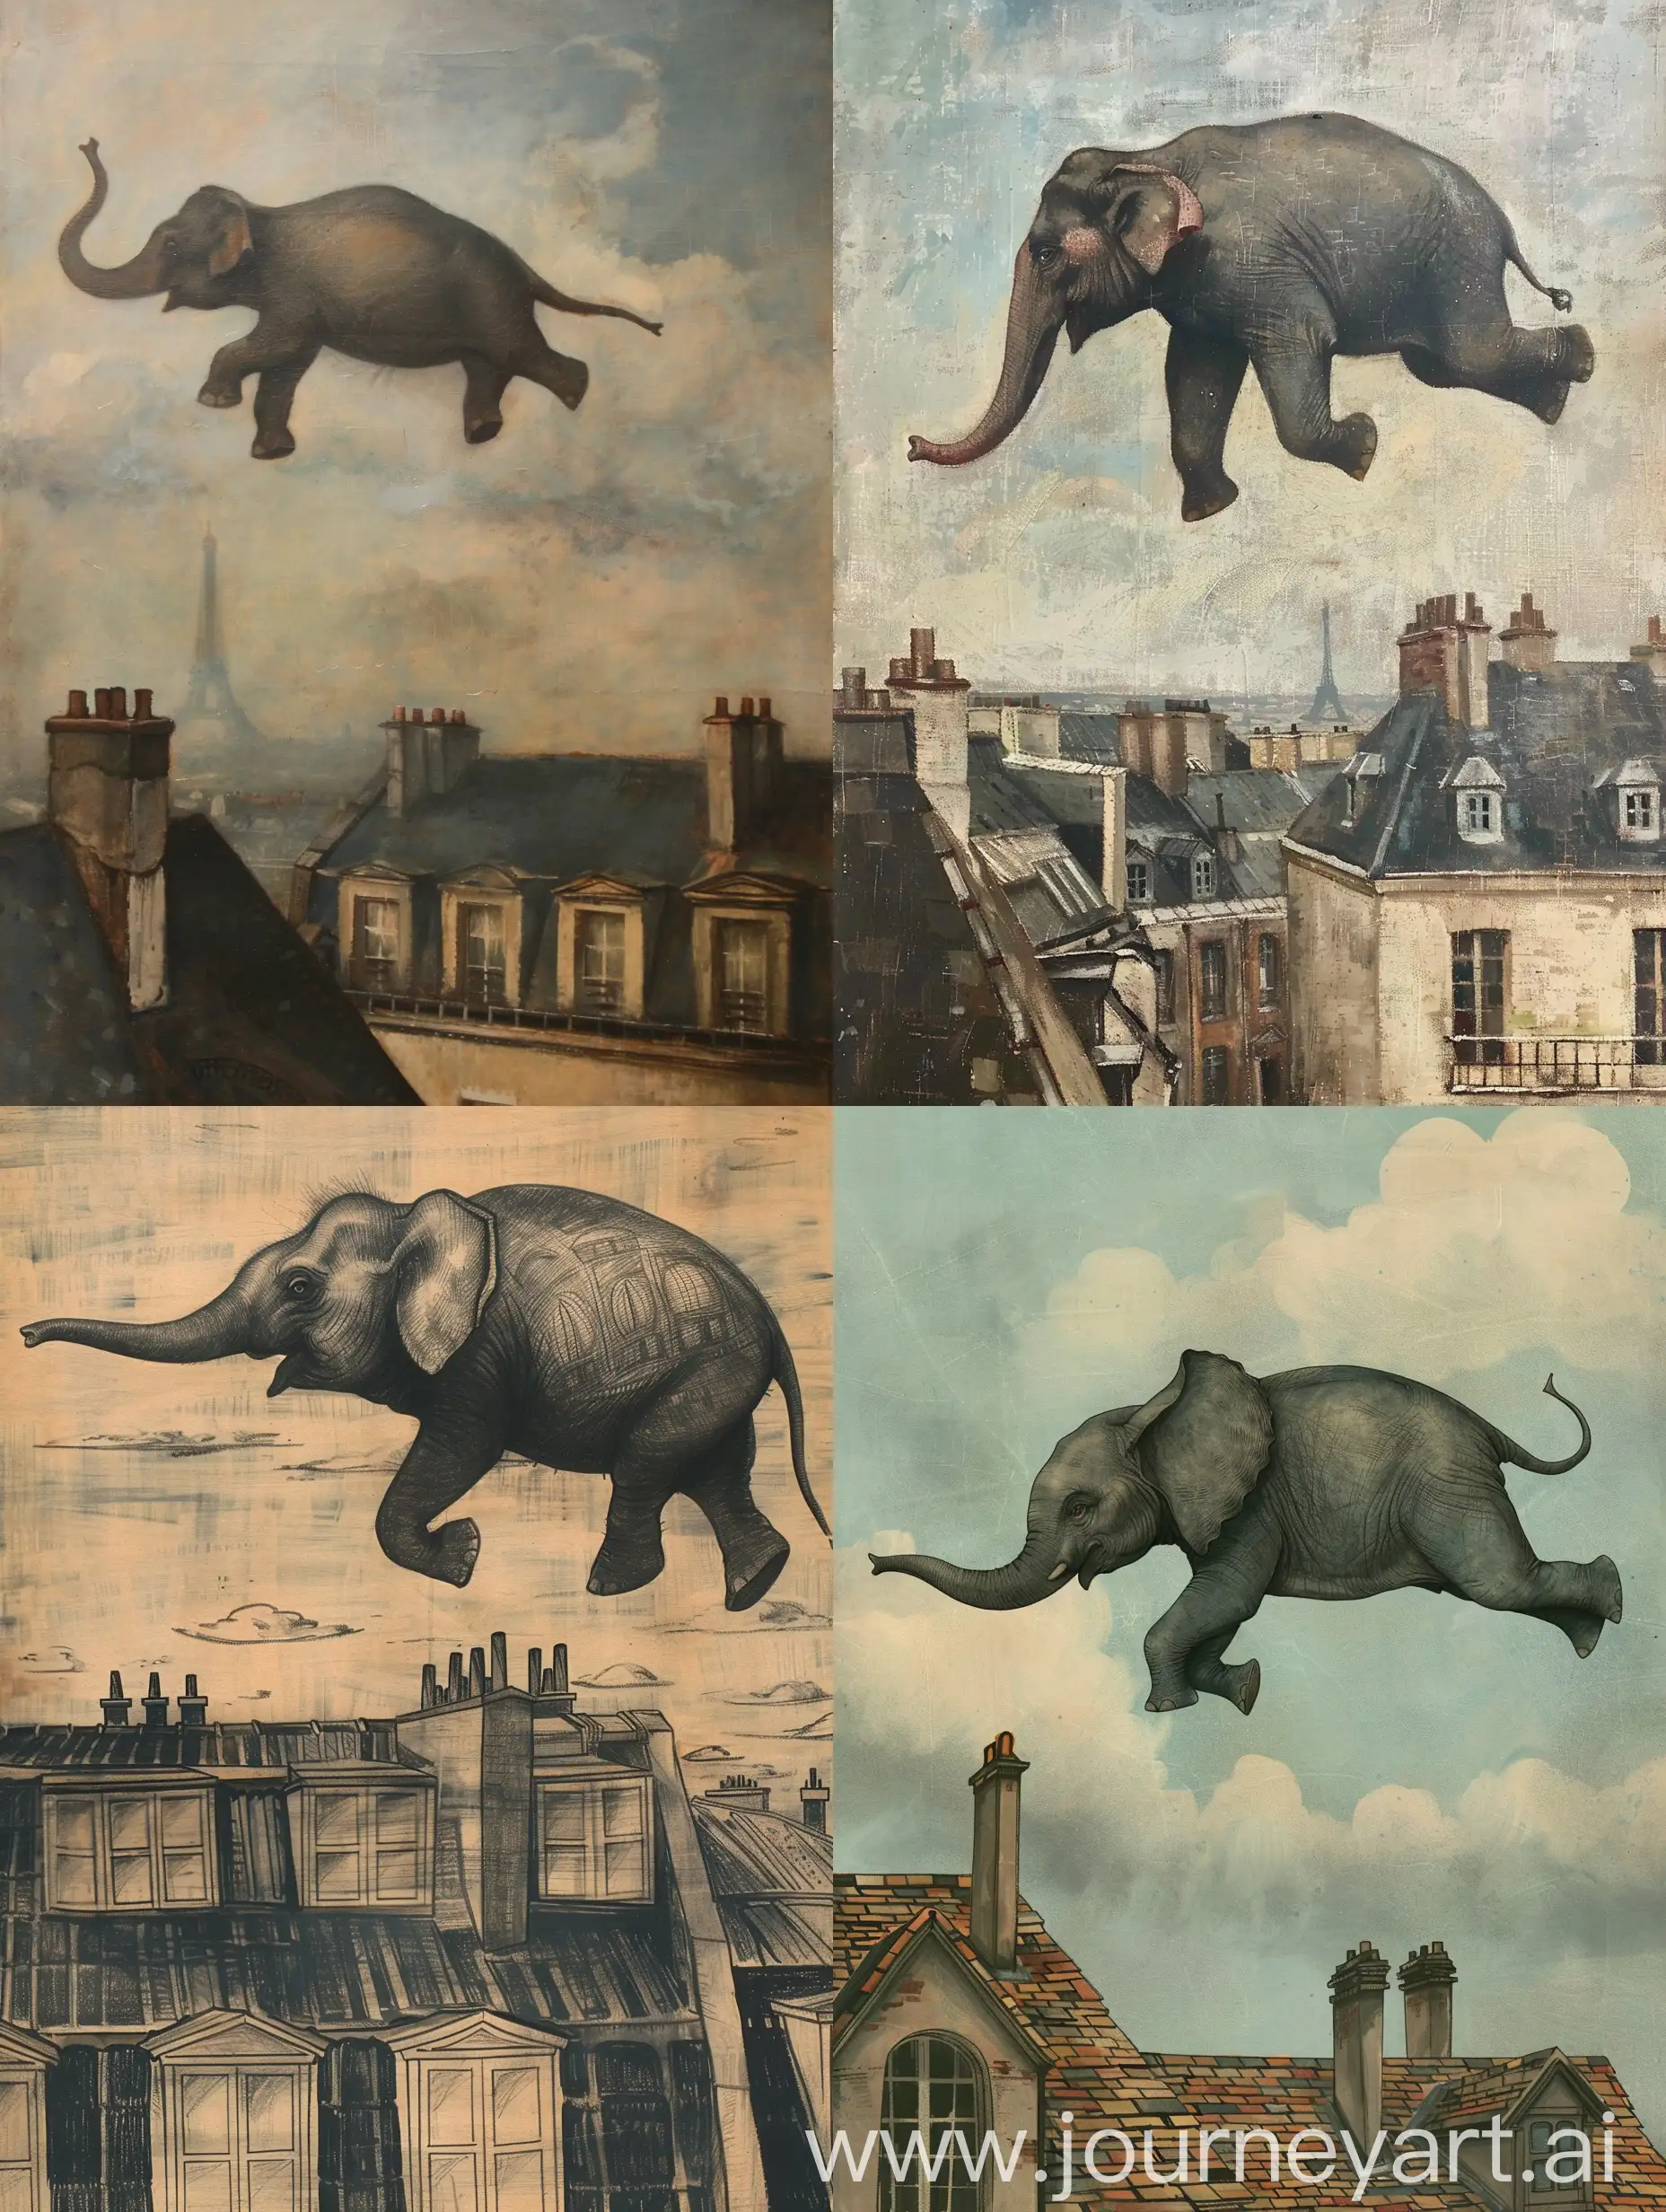 Ping elephant flies above Paris roofs. Edvard Munk style